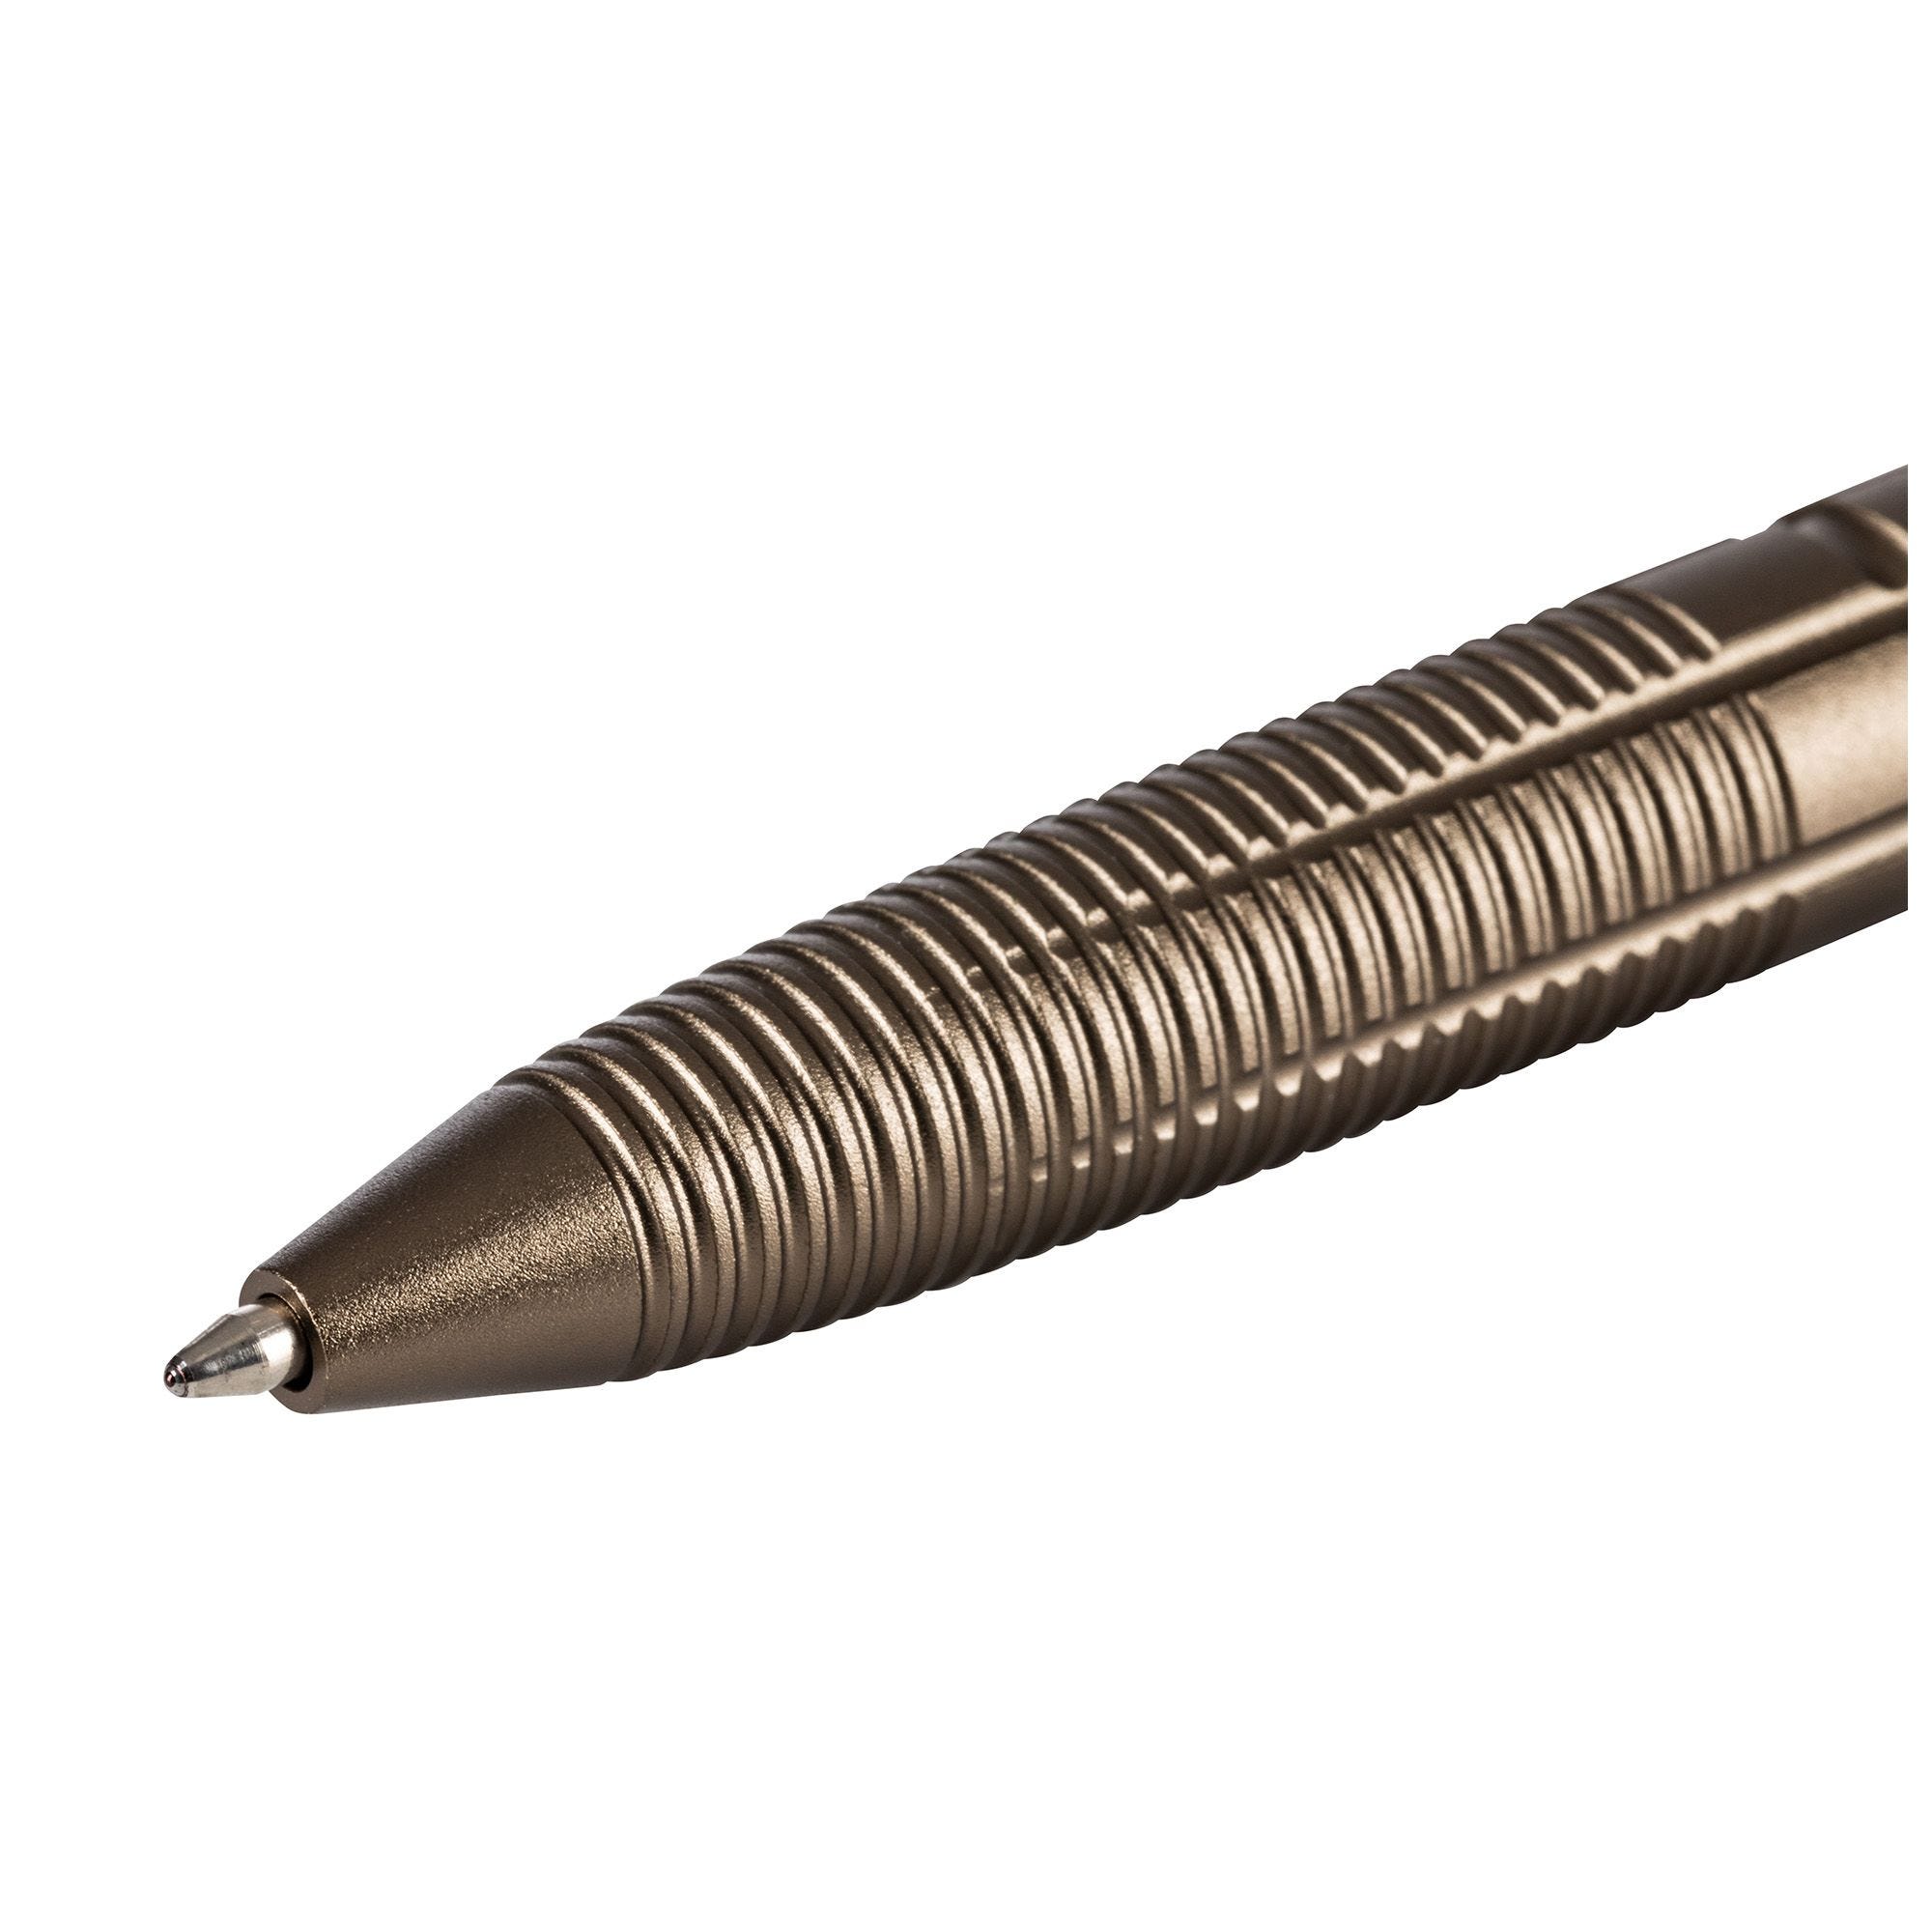 5.11 Kubaton Tactical Pen